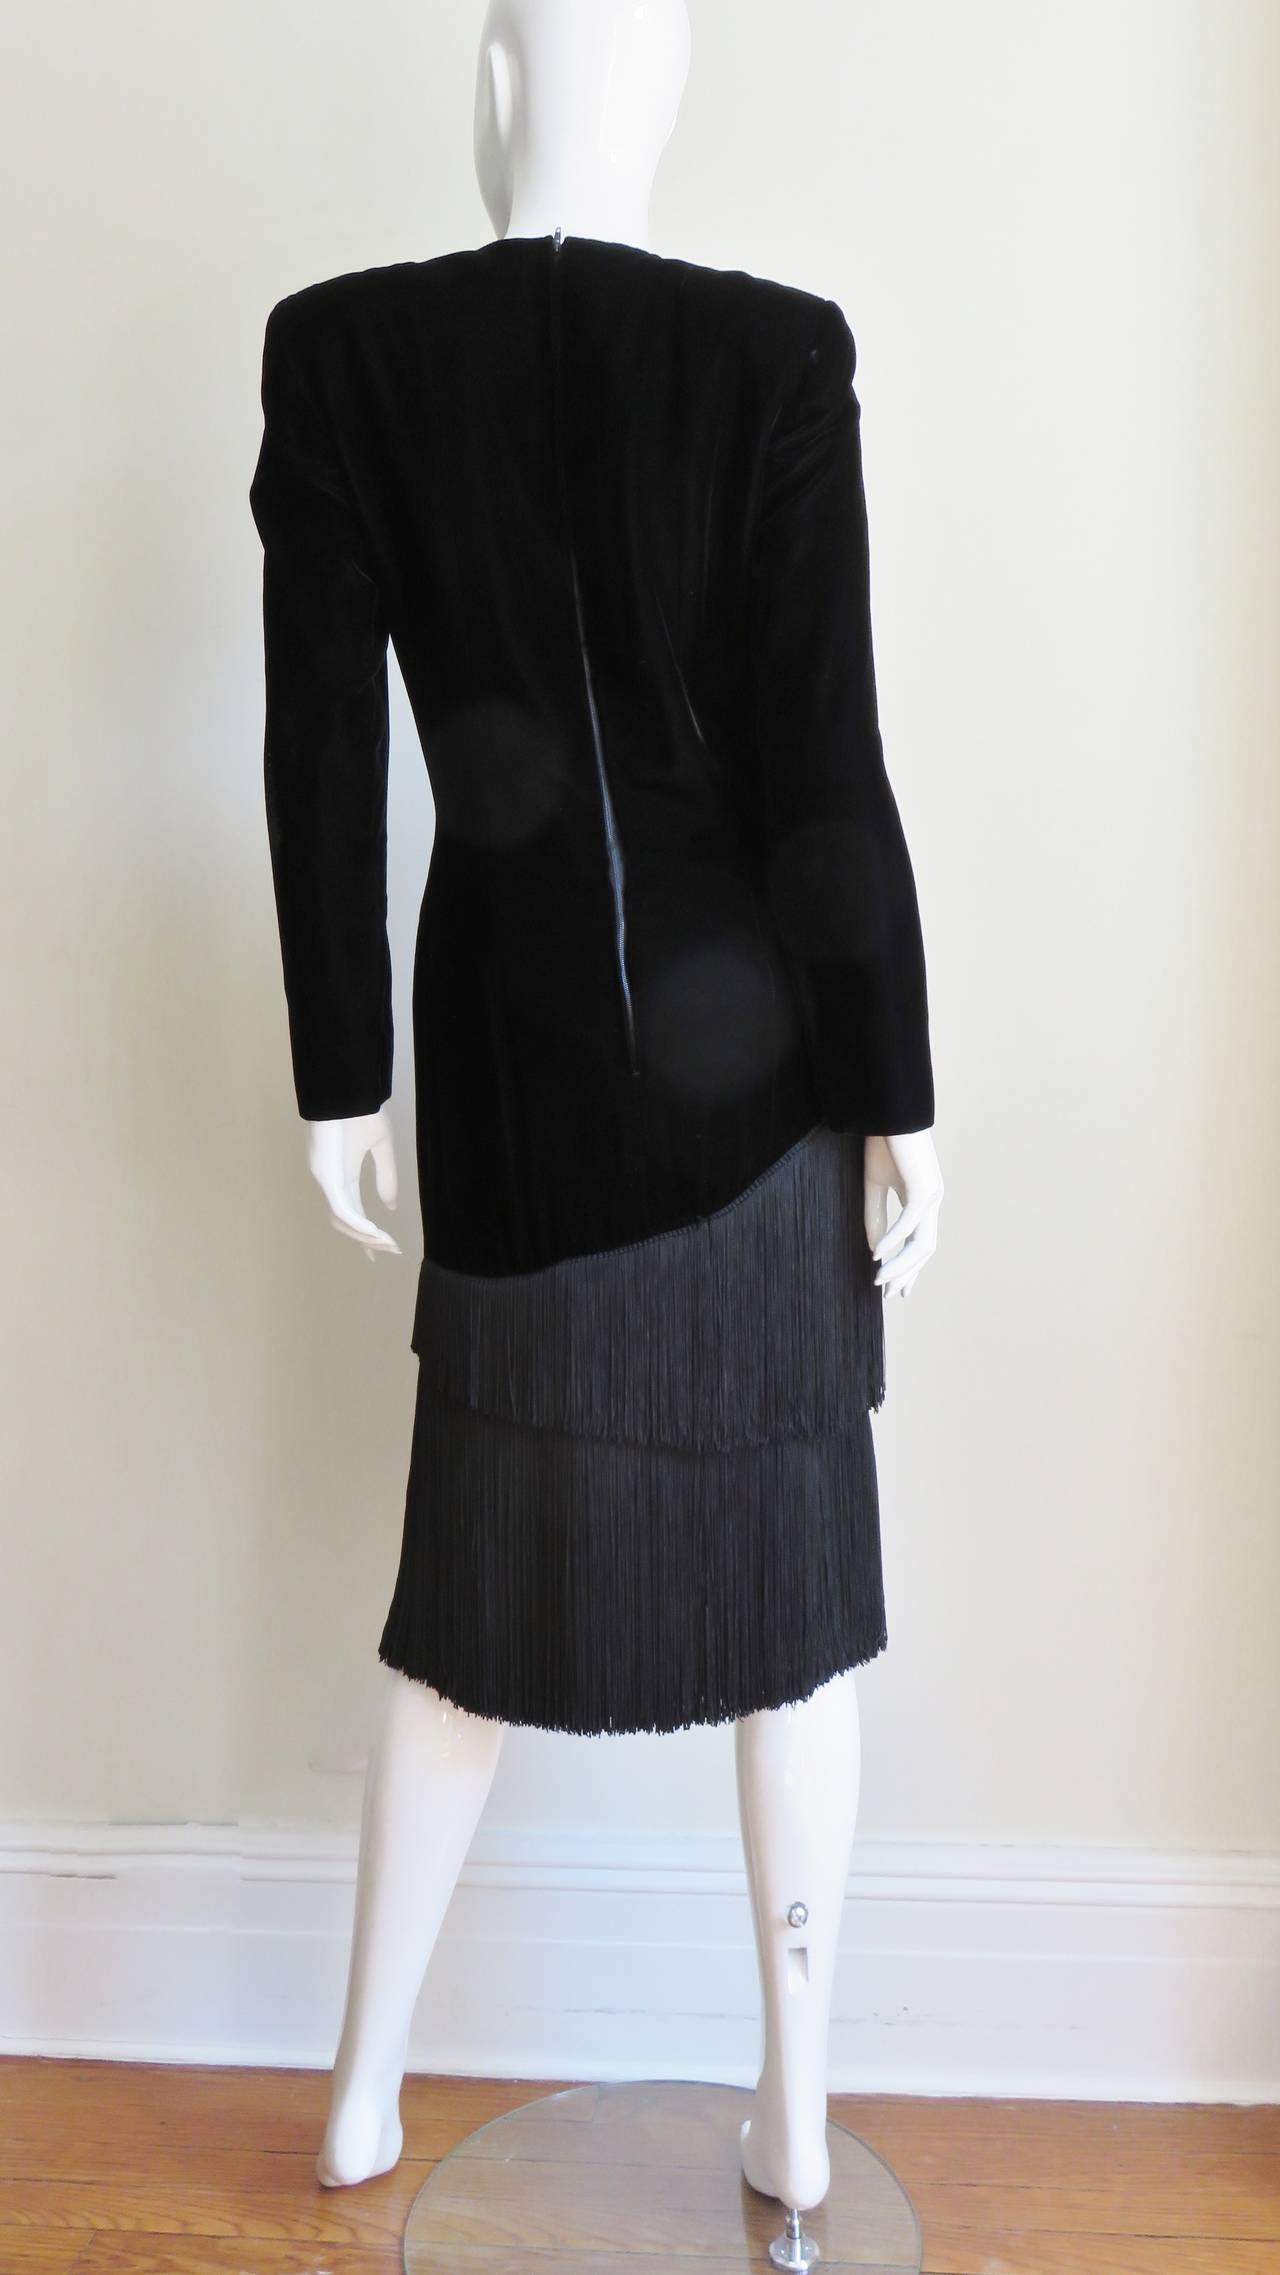  Lanvin Dress with Fringe 1980s For Sale 5